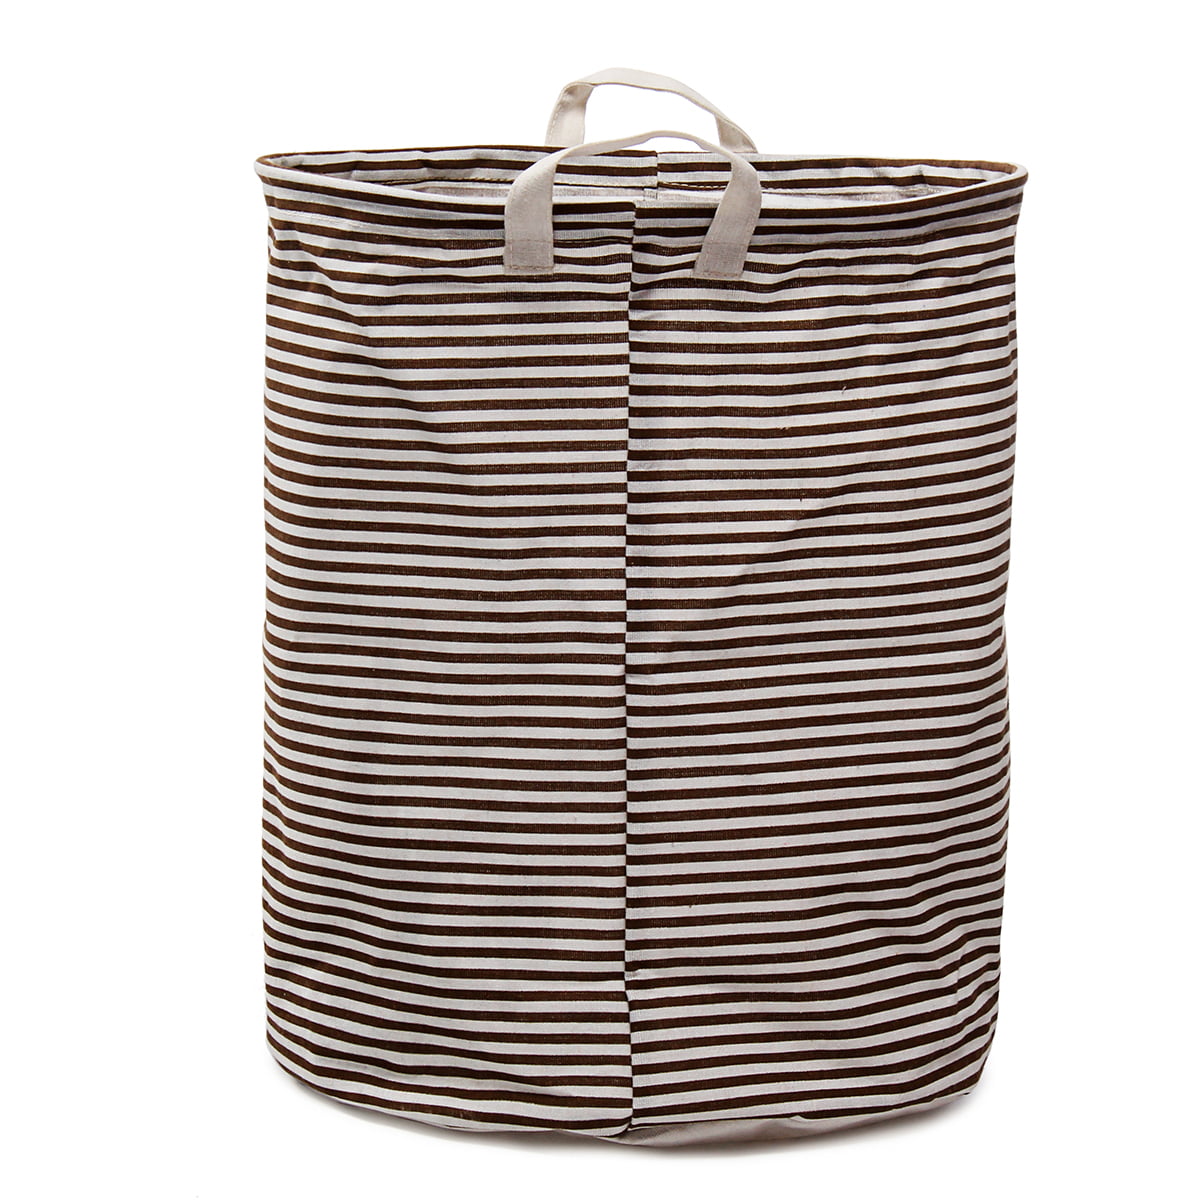 1x New Laundry Hamper Washing Basket Clothes Storage Bin Foldable Organizer 